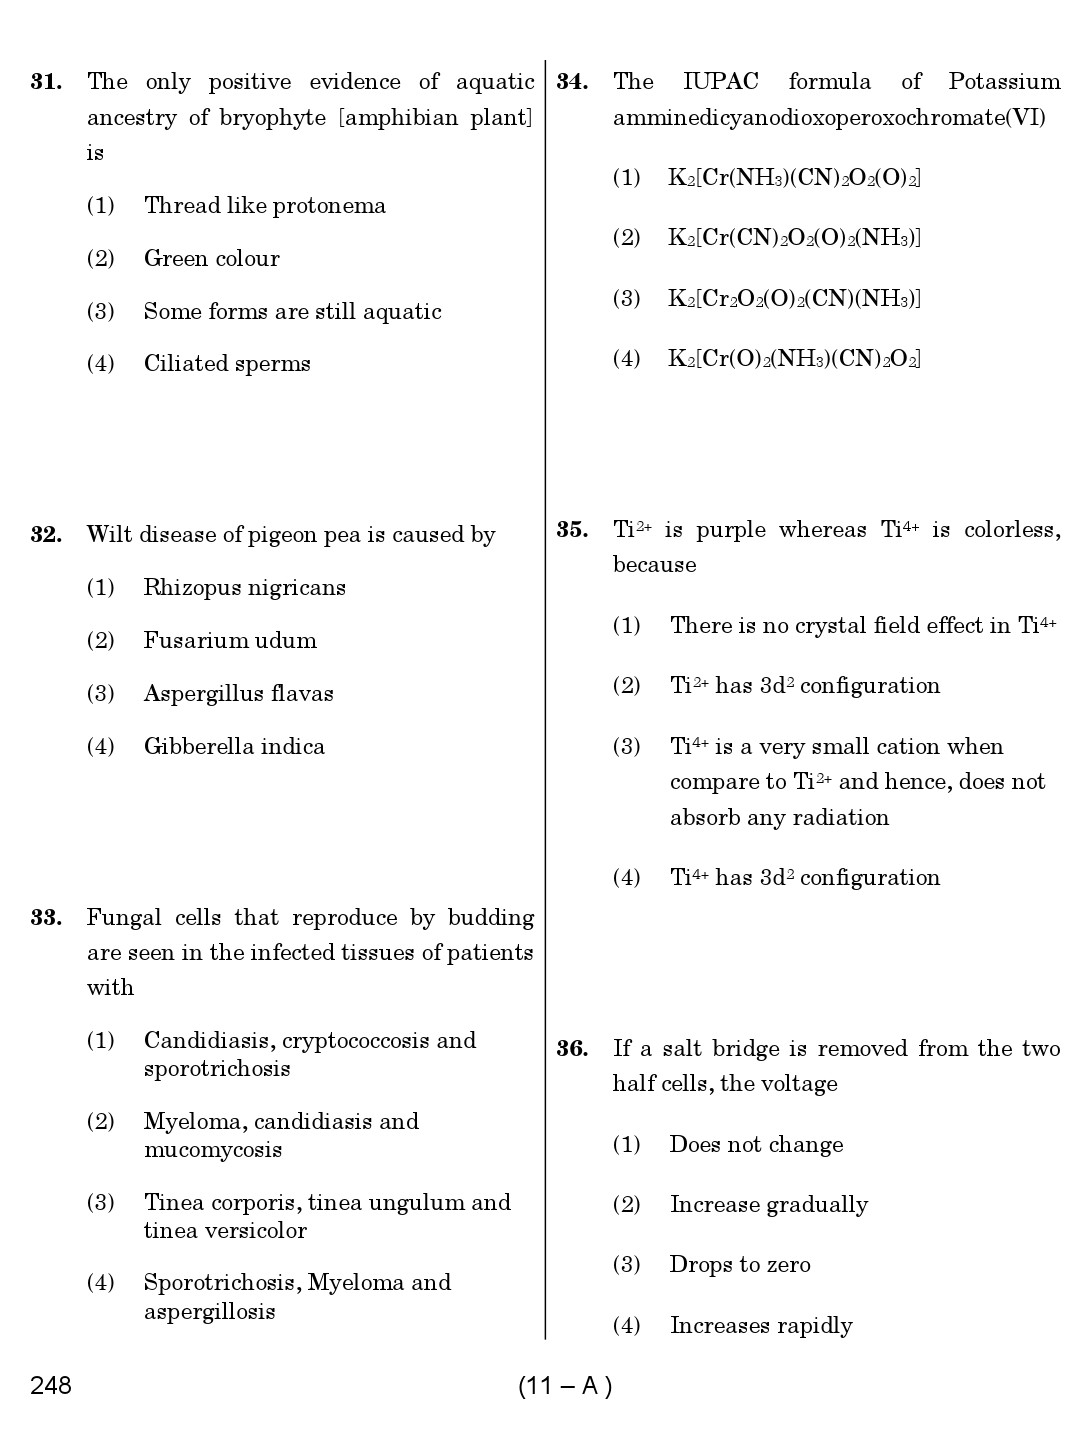 Karnataka PSC Laboratory Assistant Exam Sample Question Paper 11